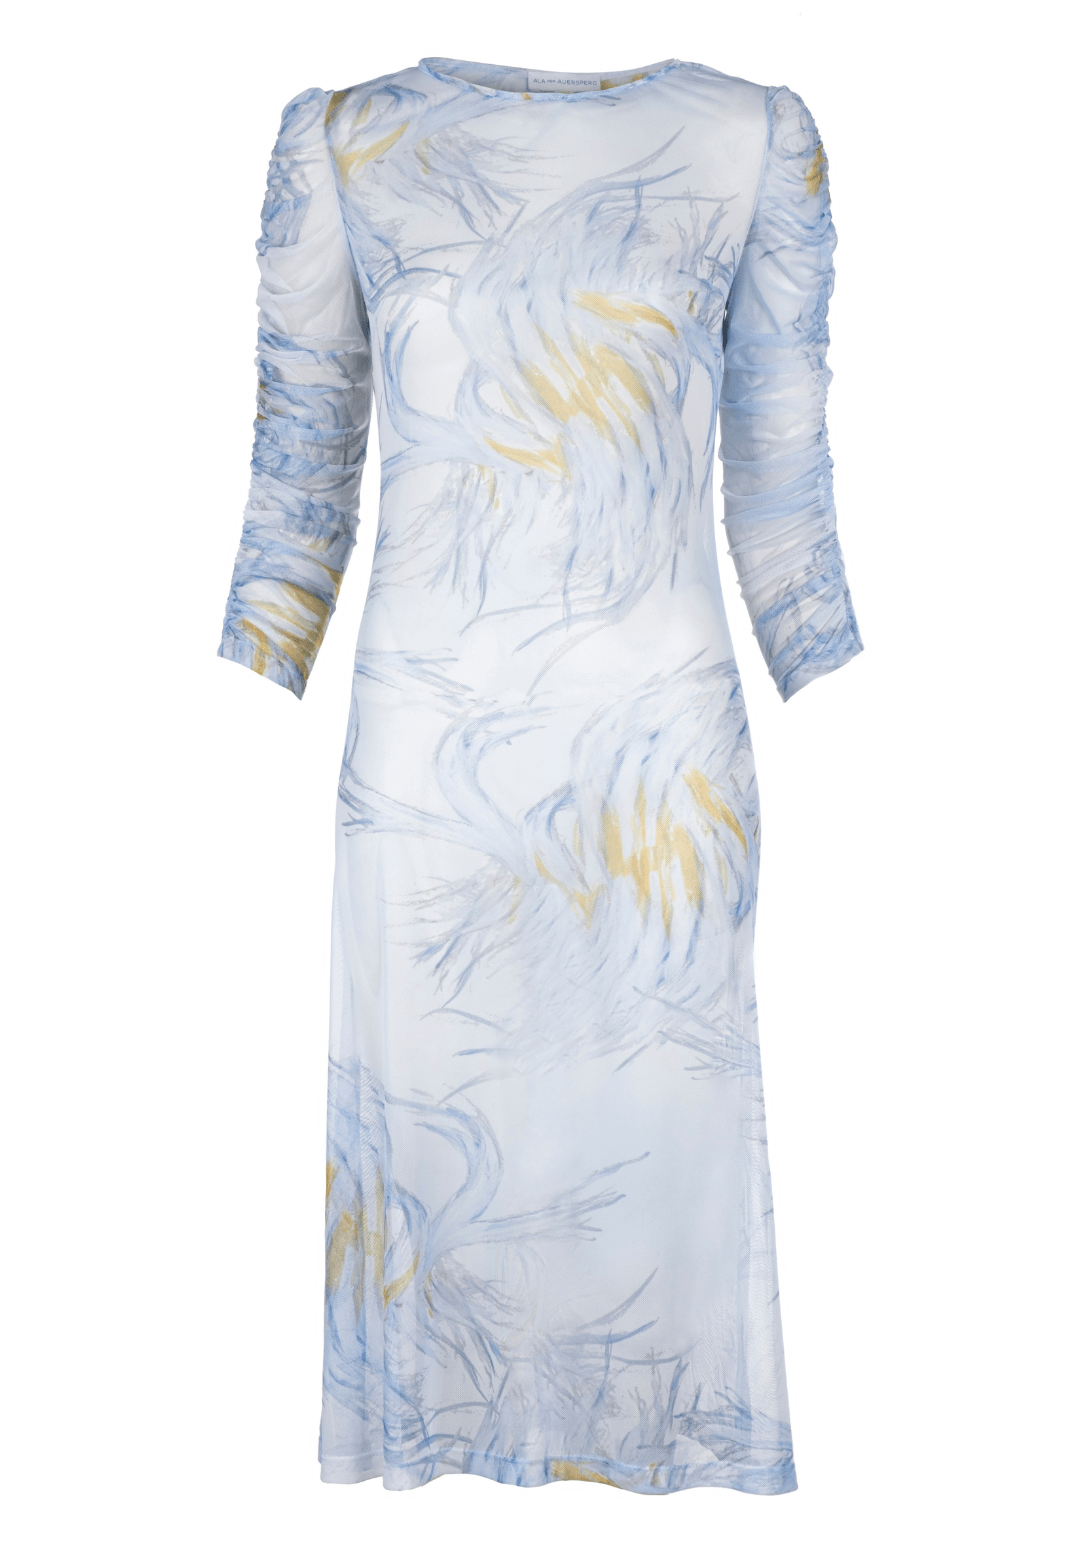 Carly Mesh Dress in Birds of Paradise - AlavonAuersperg.com